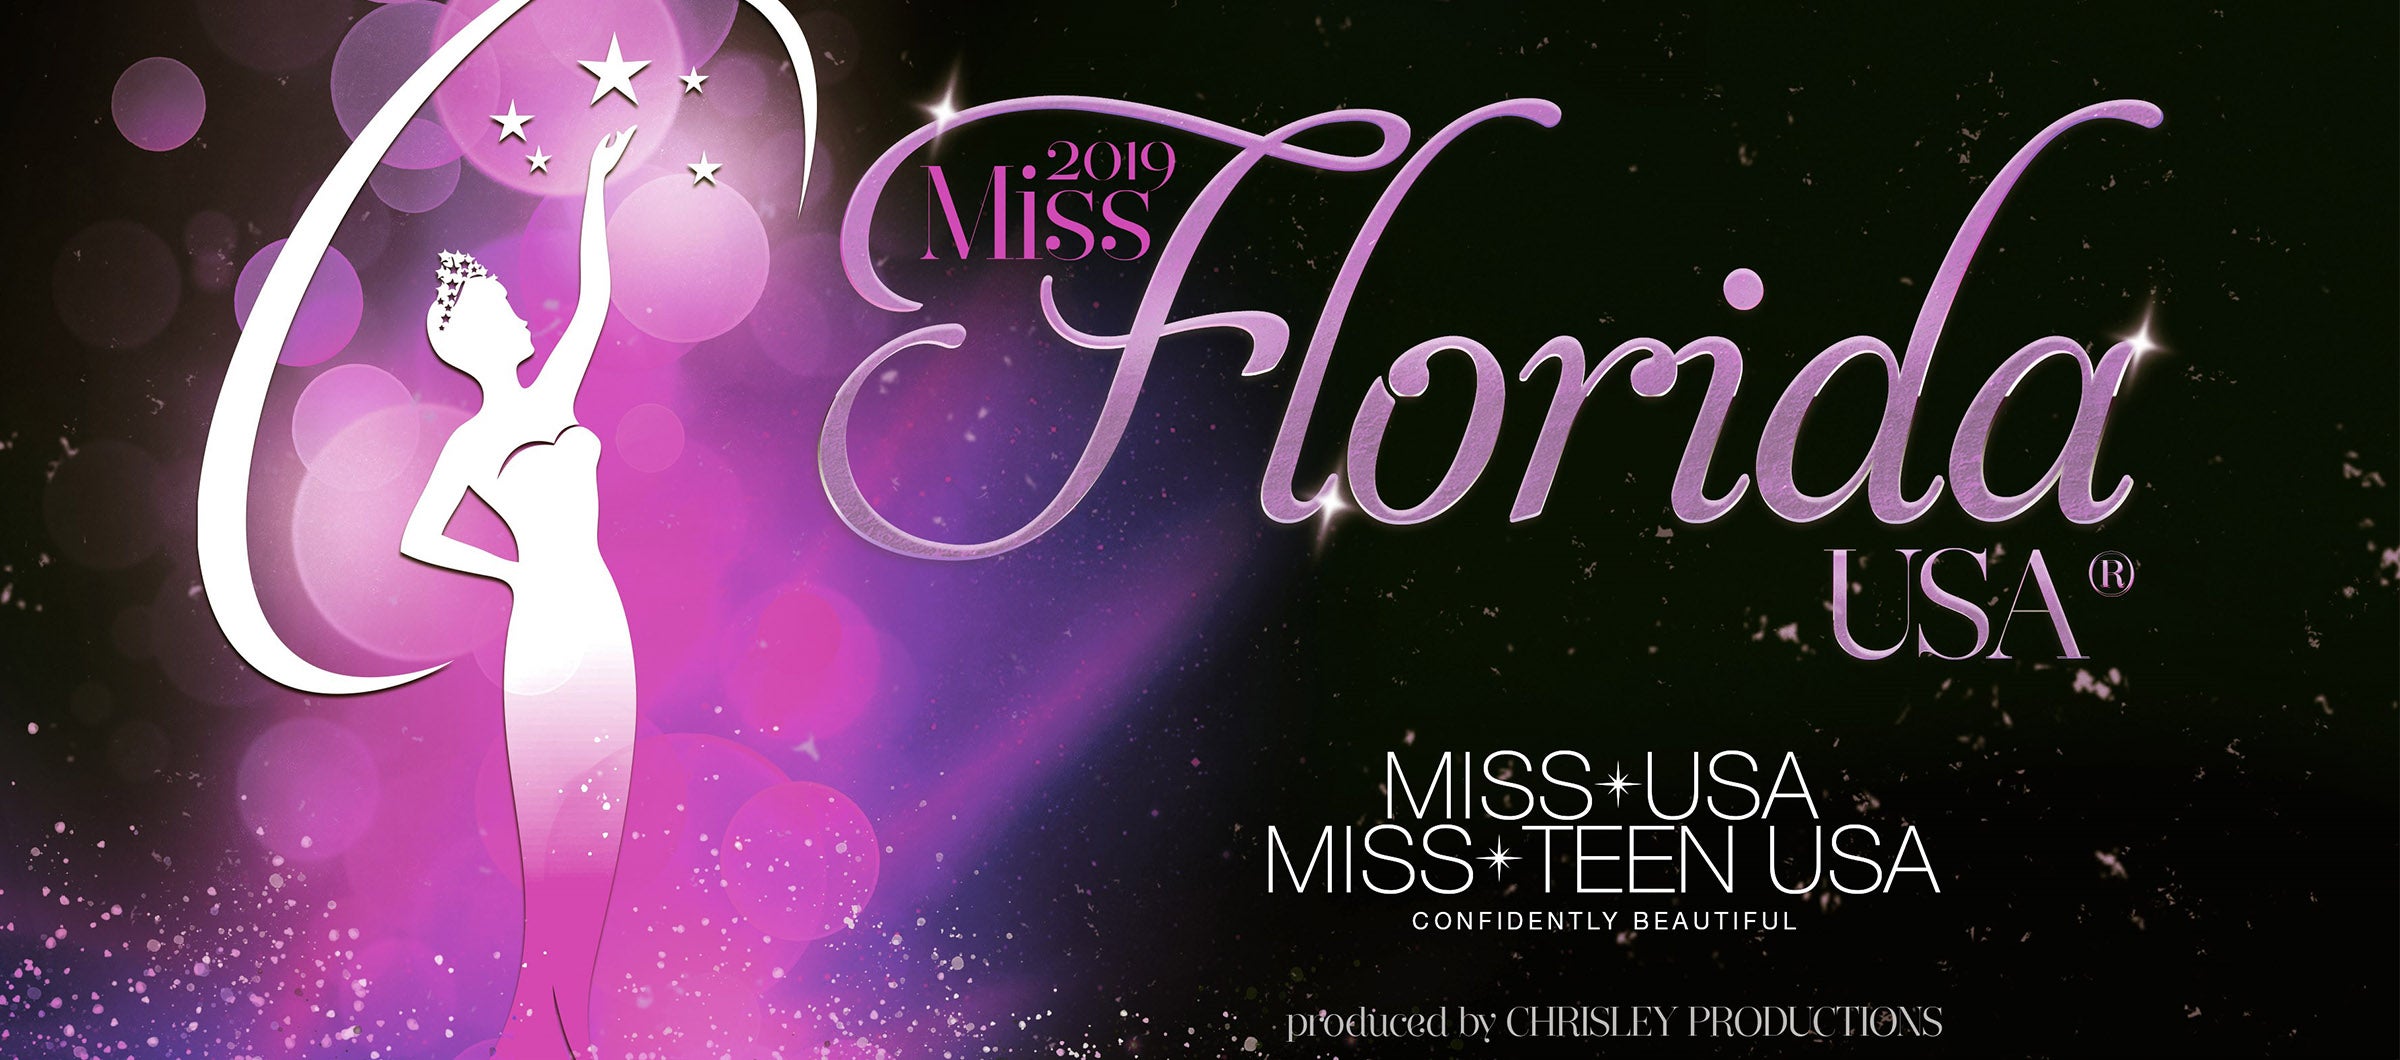 Miss Florida USA and Miss Florida Teen USA 